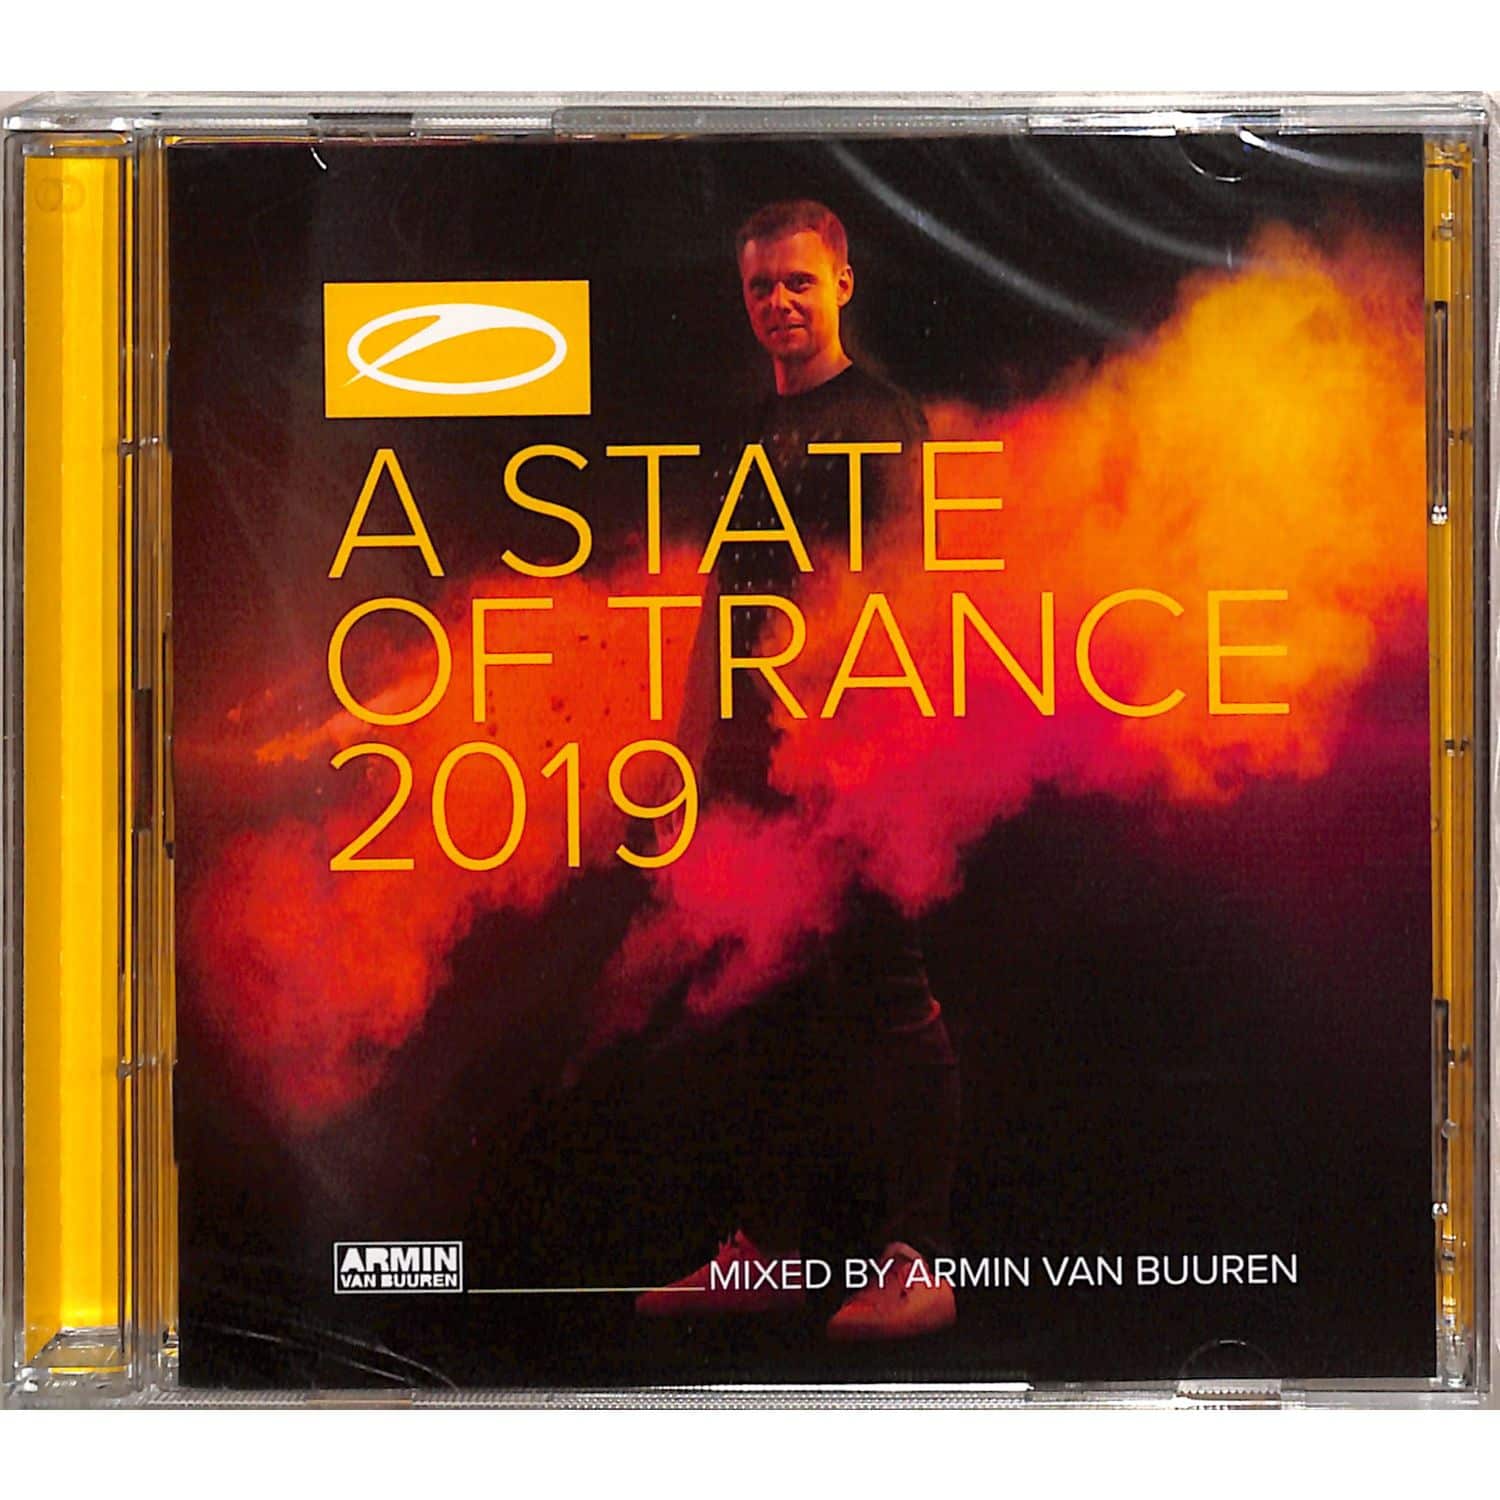 Armin Van Buuren - A STATE OF TRANCE 2019 